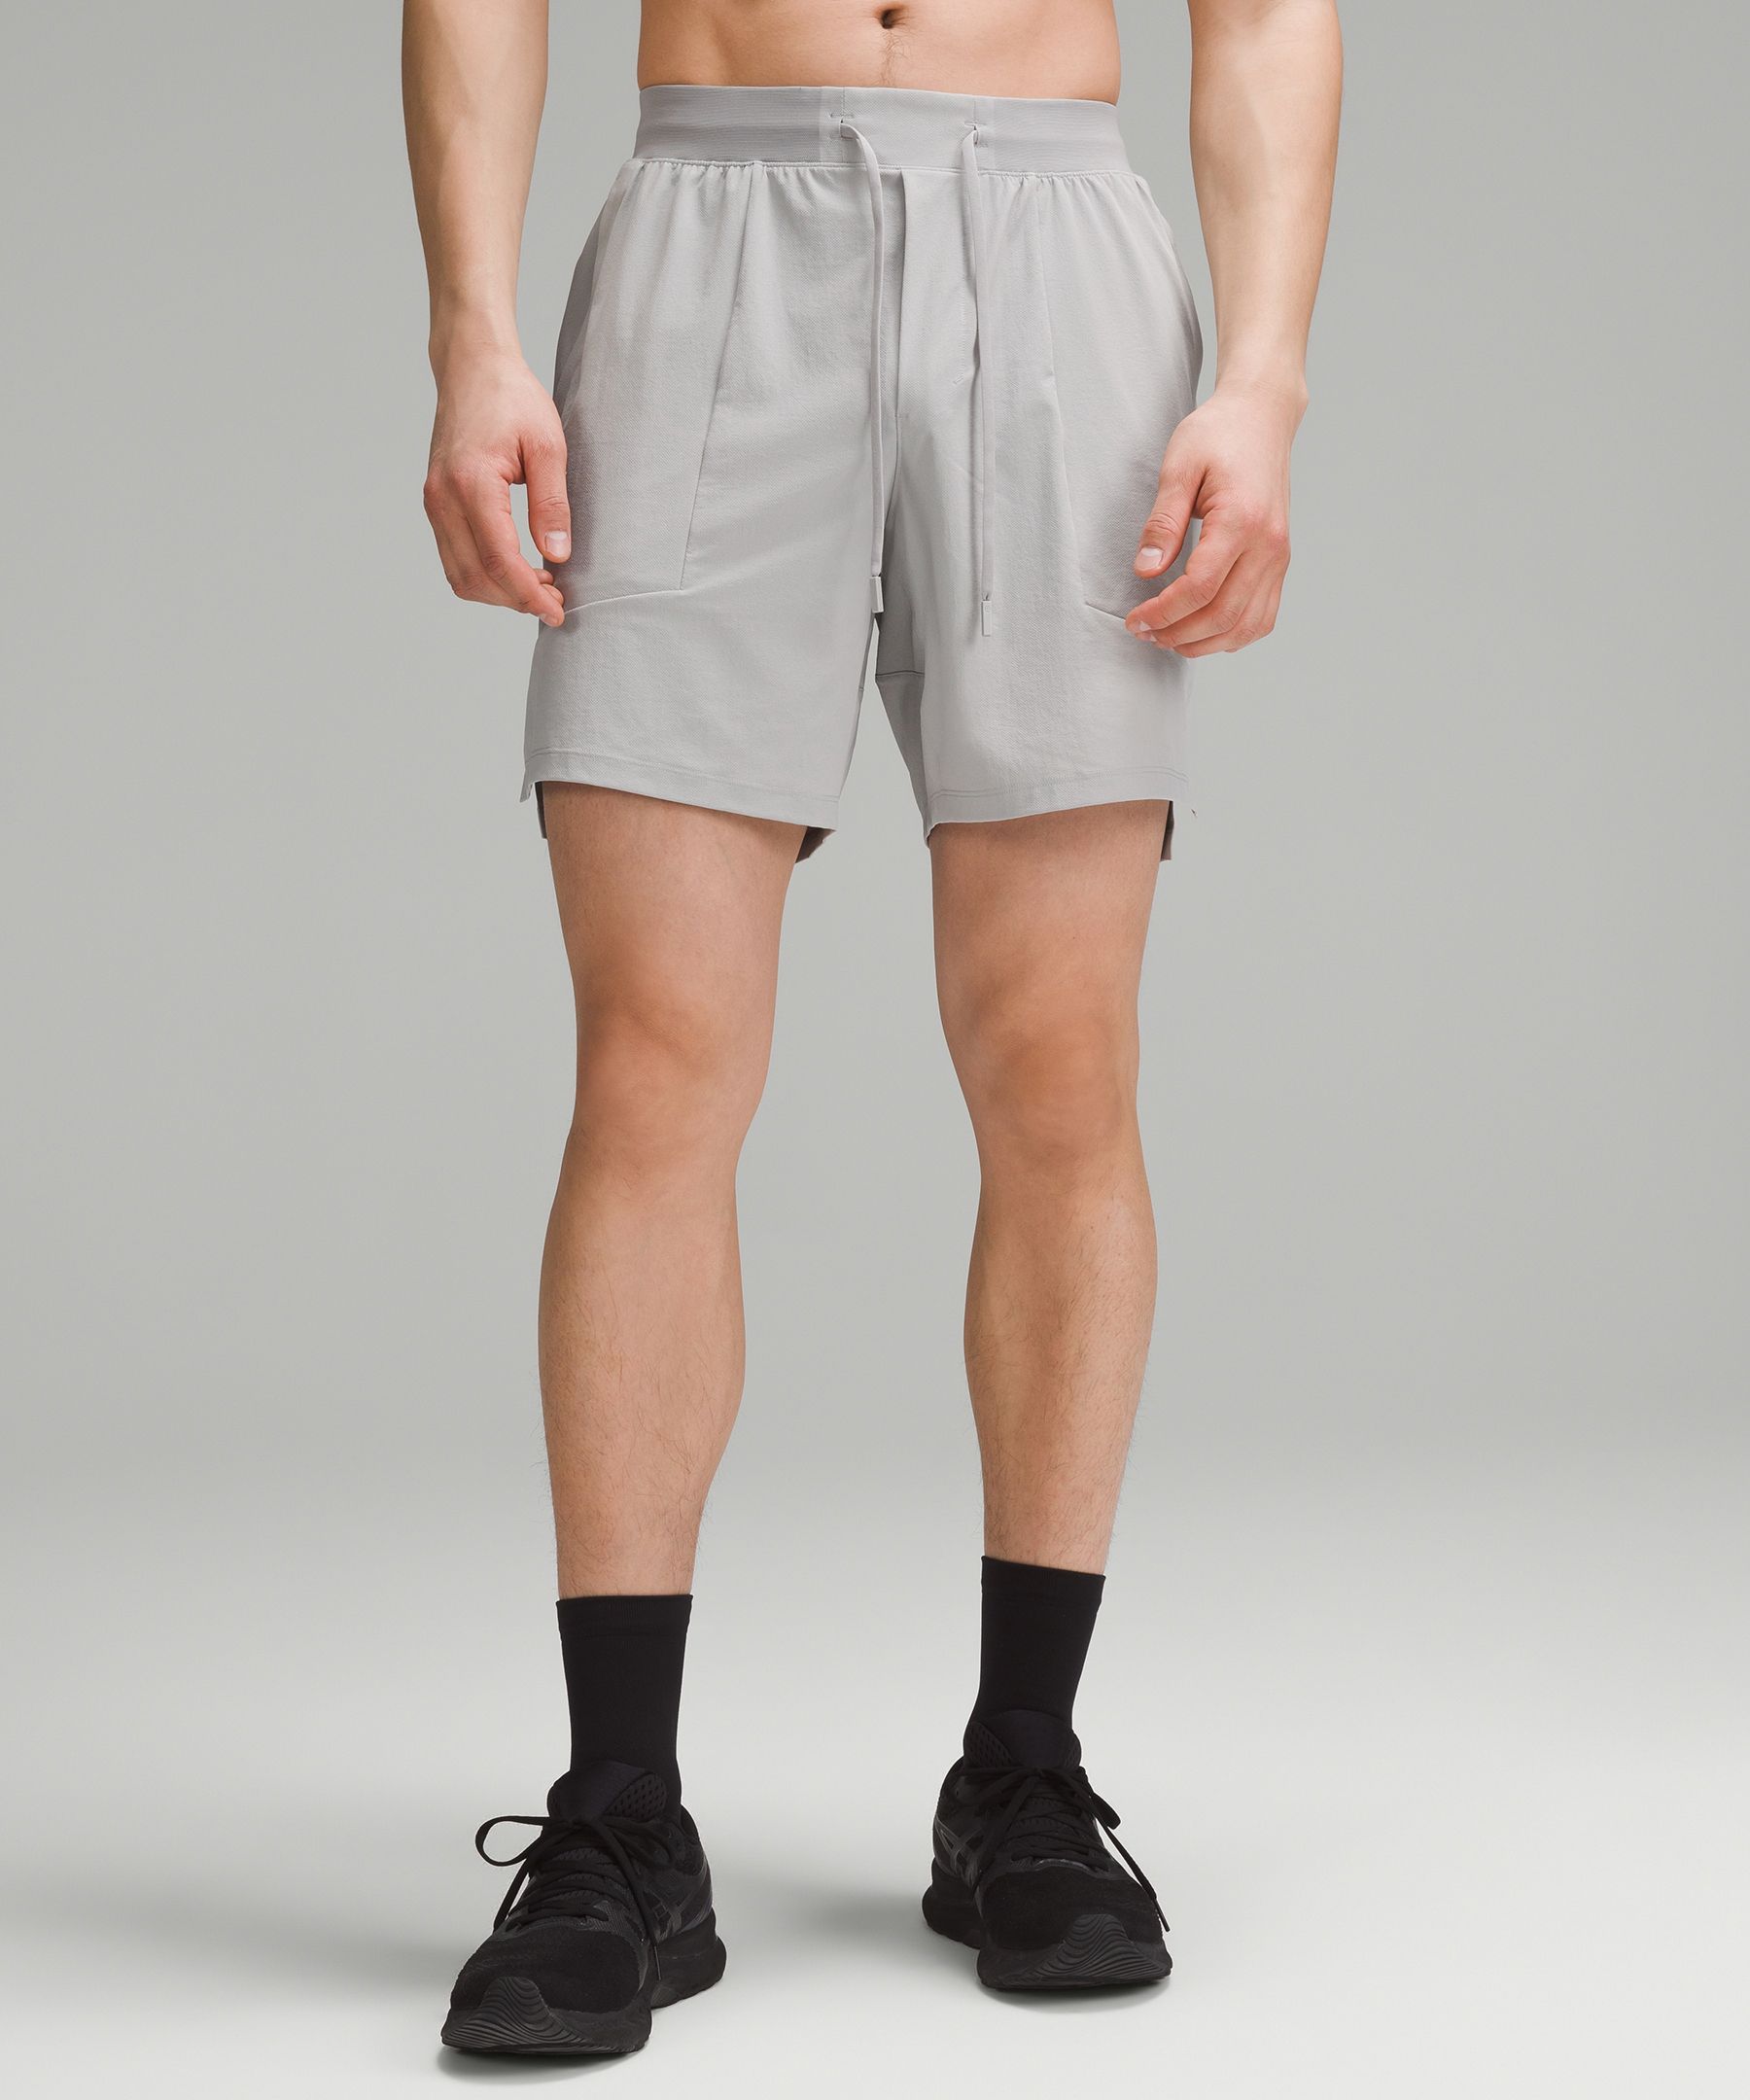 License to Train Linerless Short 7, Men's Shorts